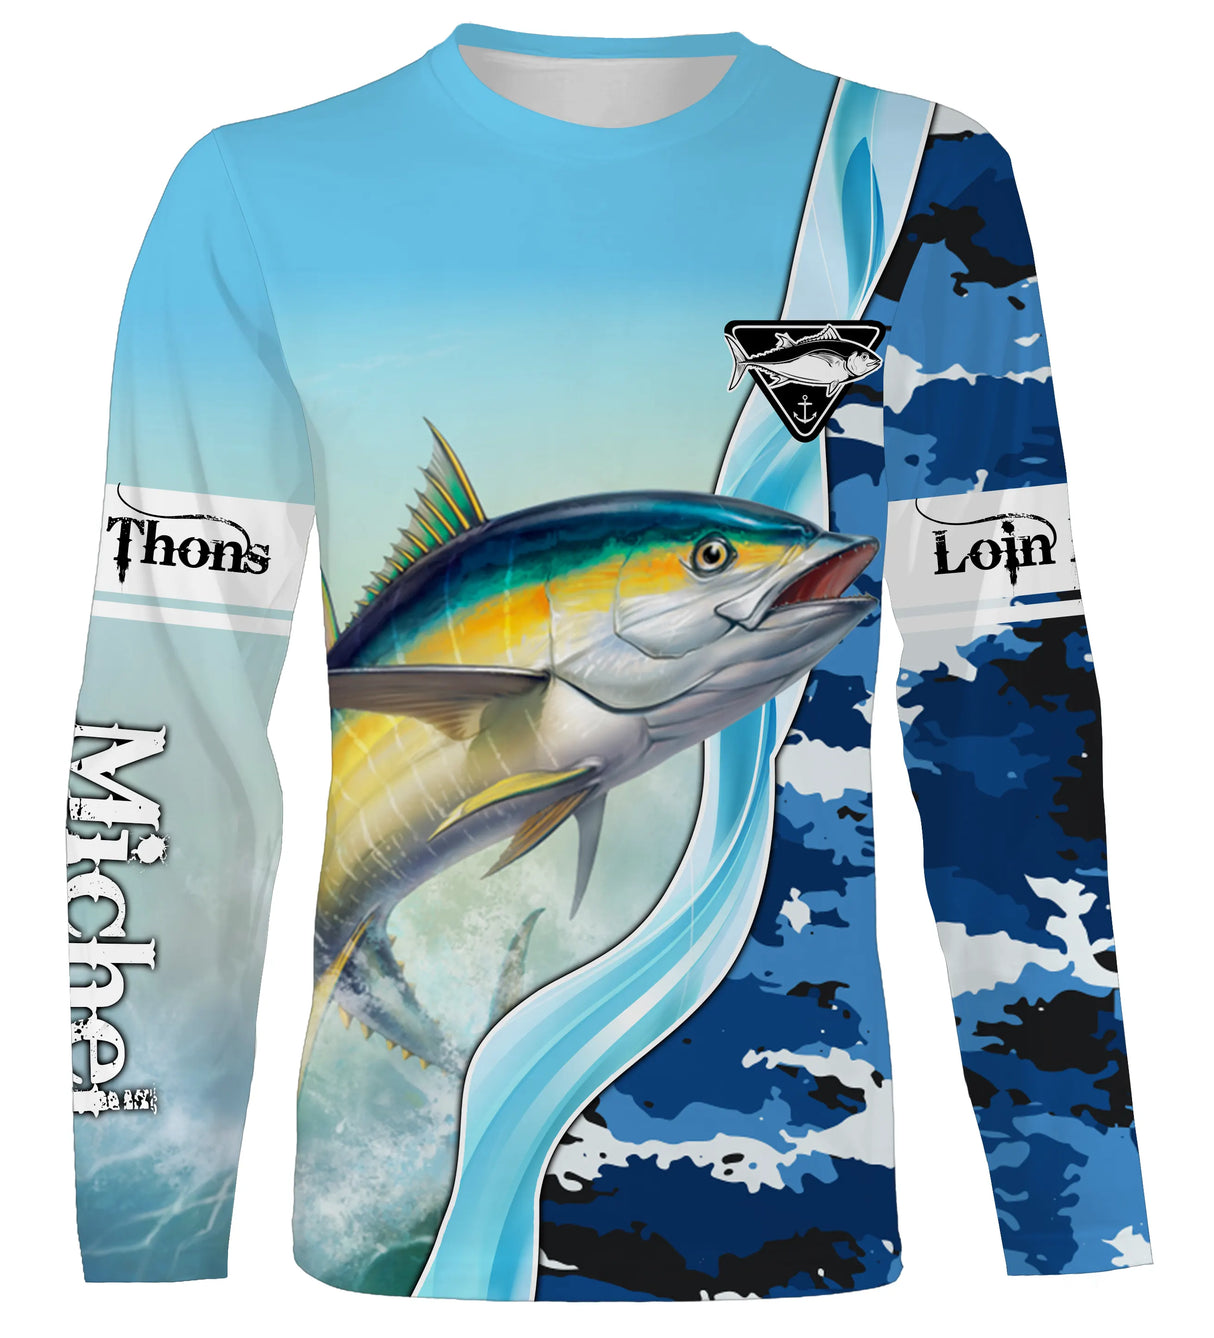 T-shirt Anti UV Personnalisé Pêcheur, Pêche Au Thon, Camouflage Pêche En Mer - CT05082227